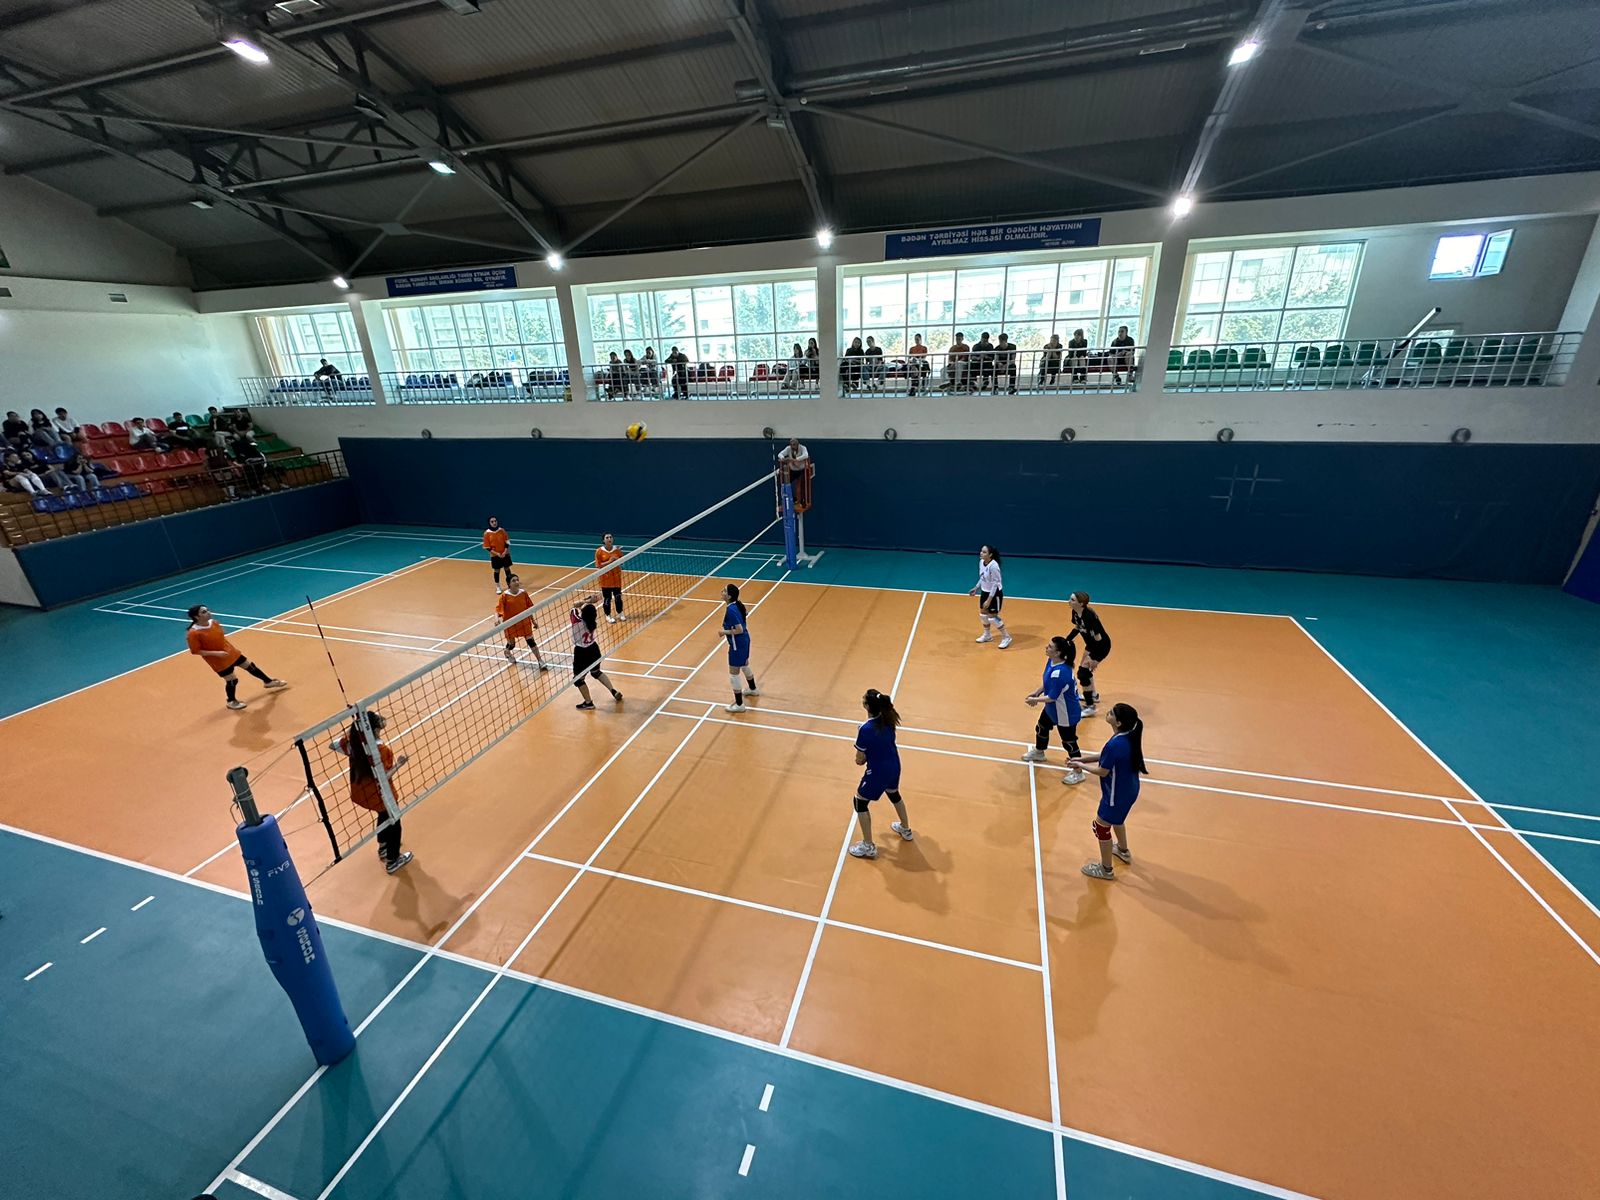 WCU Girls' Volleyball Team Wins Azerbaijan State Pedagogical University with 2:1 Score